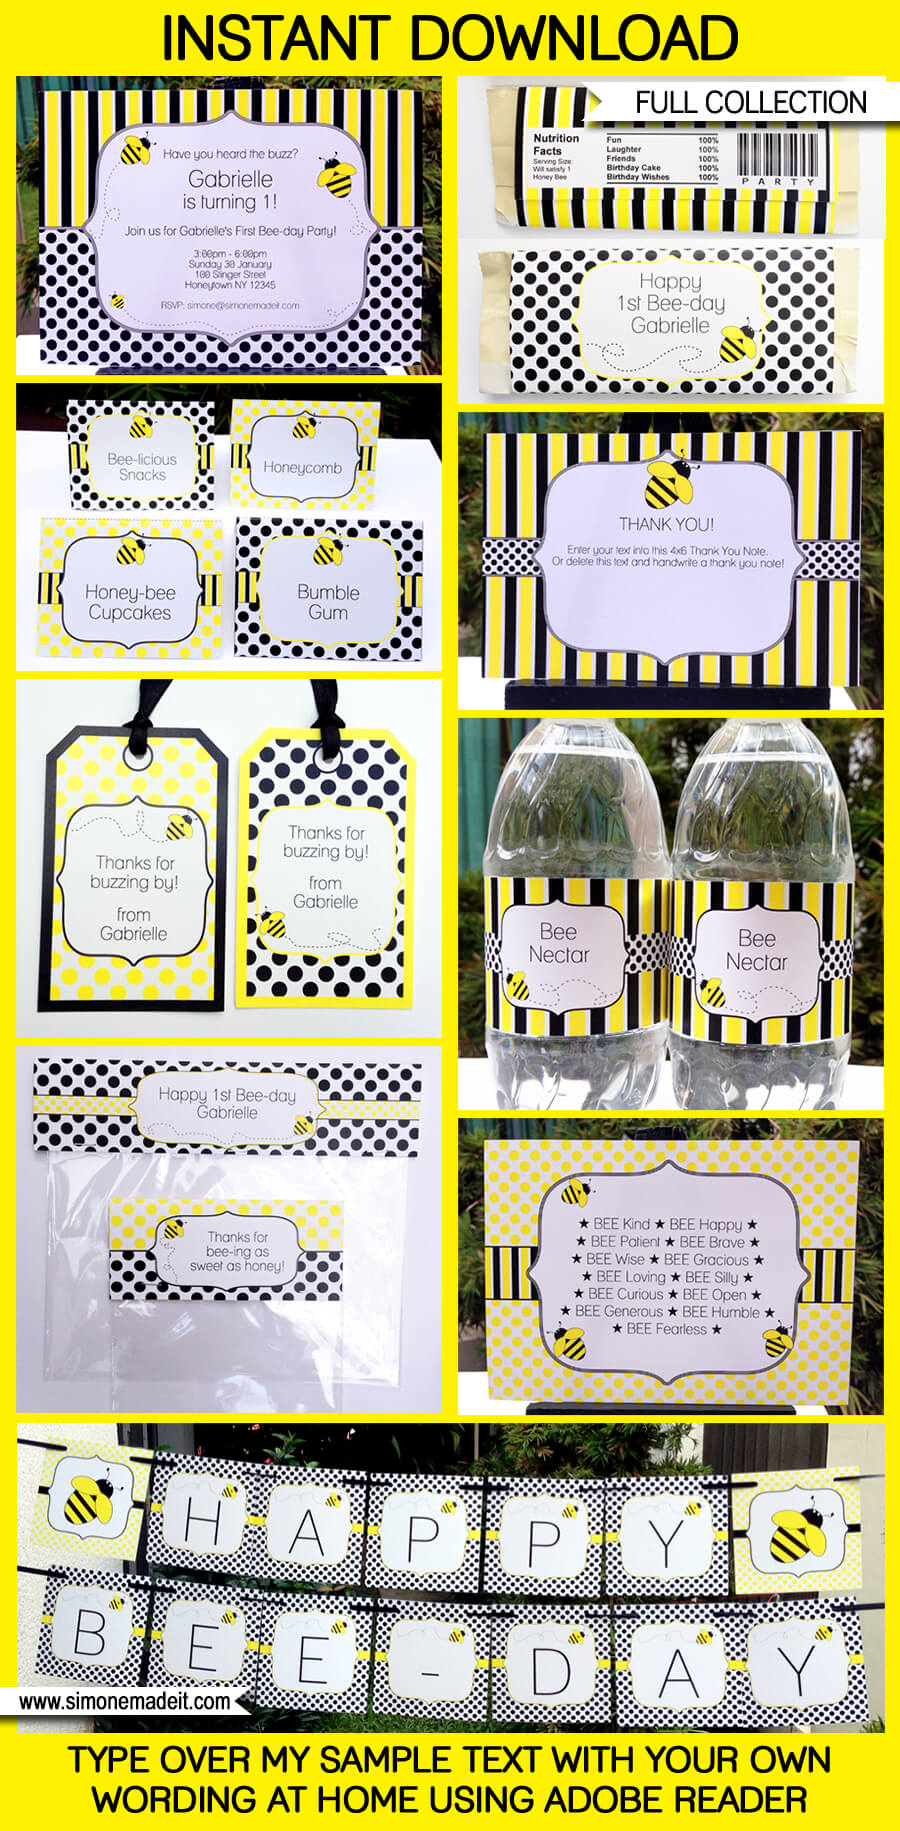 Bee Party Printables, Invitations & Decorations | Birthday Party | Editable Theme Templates | INSTANT DOWNLOAD $12.50 via SIMONEmadeit.com